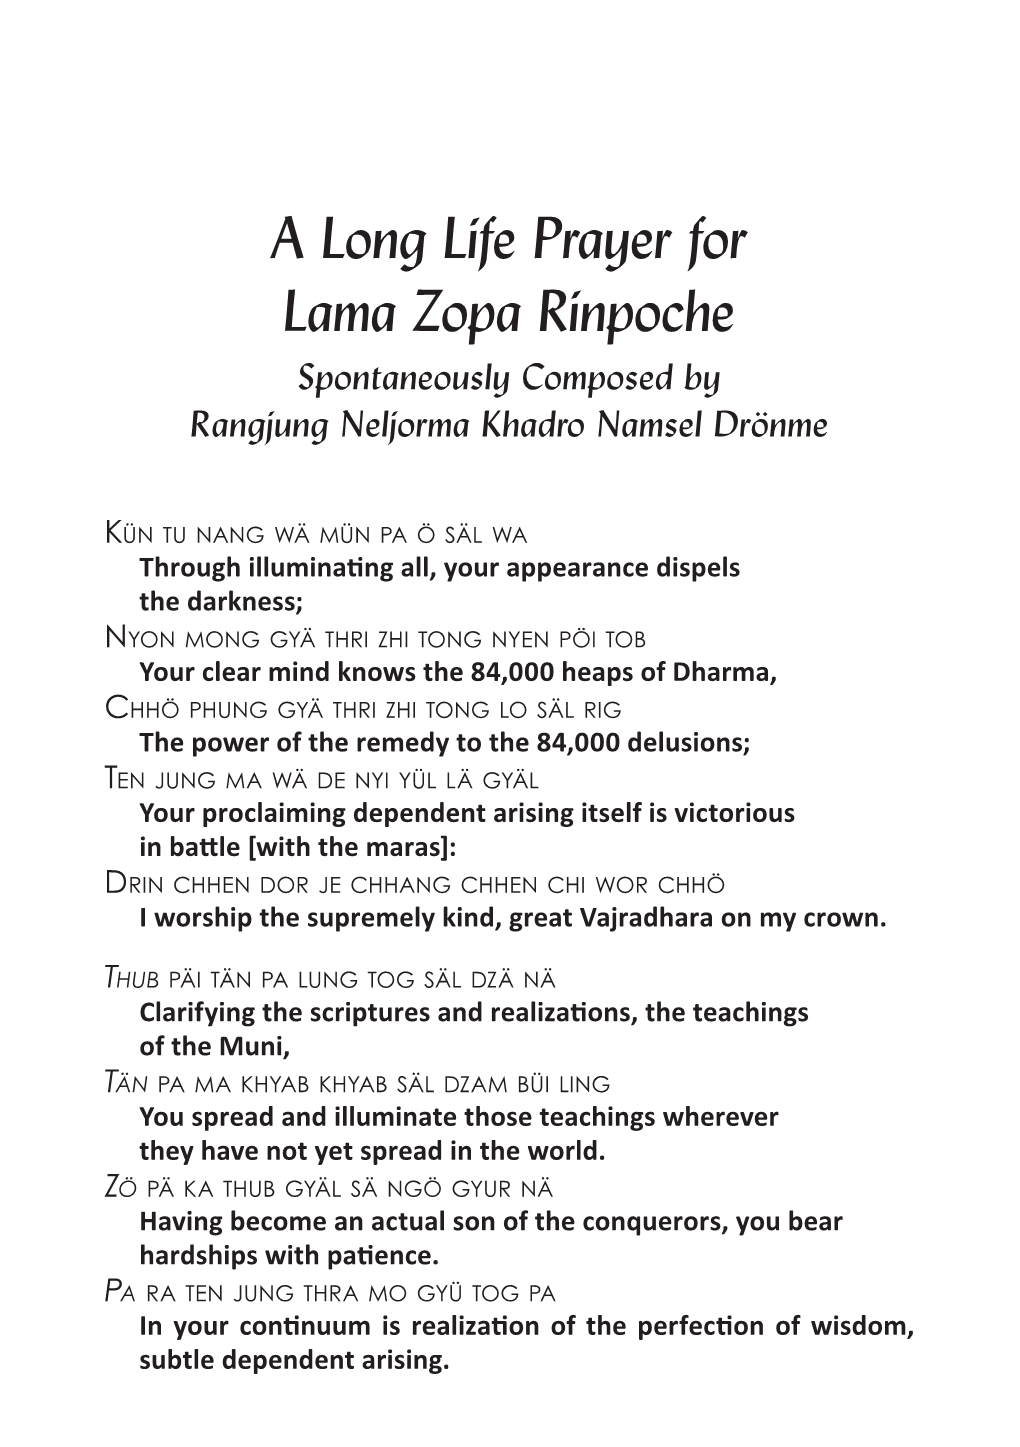 A Long Life Prayer for Lama Zopa Rinpoche Spontaneously Composed by Rangjung Neljorma Khadro Namsel Drönme